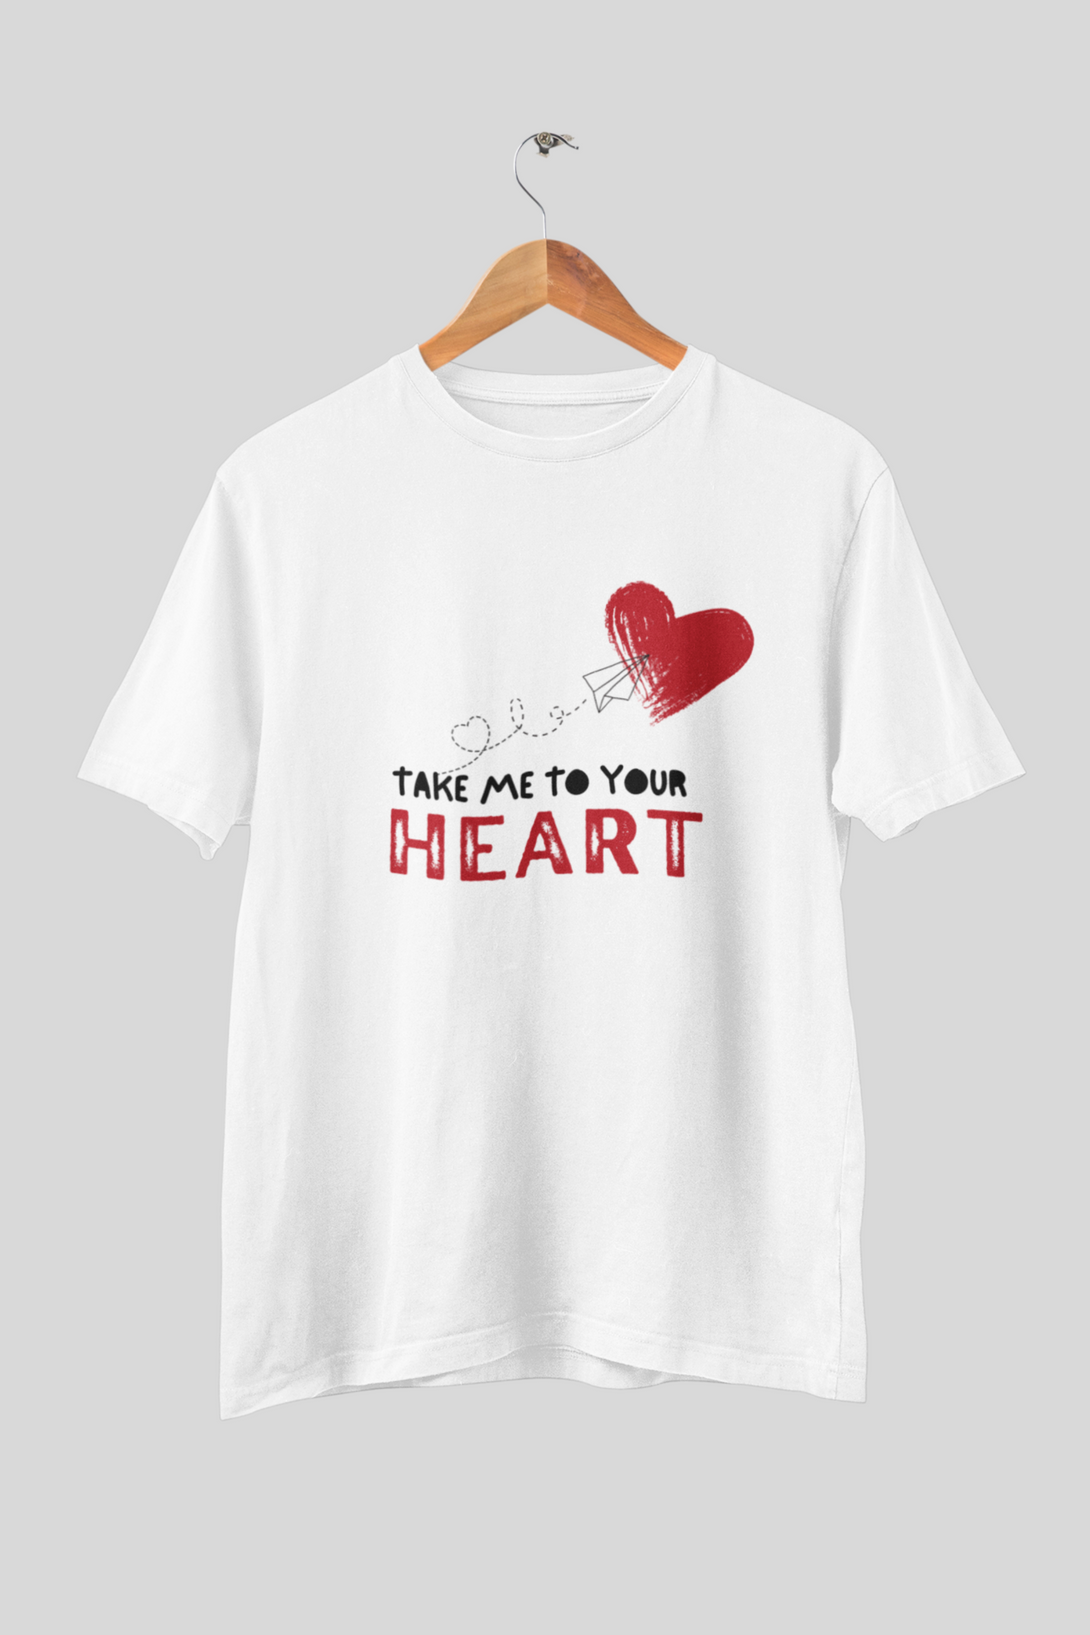 Take My Heart Couple T Shirt - WowWaves - 3